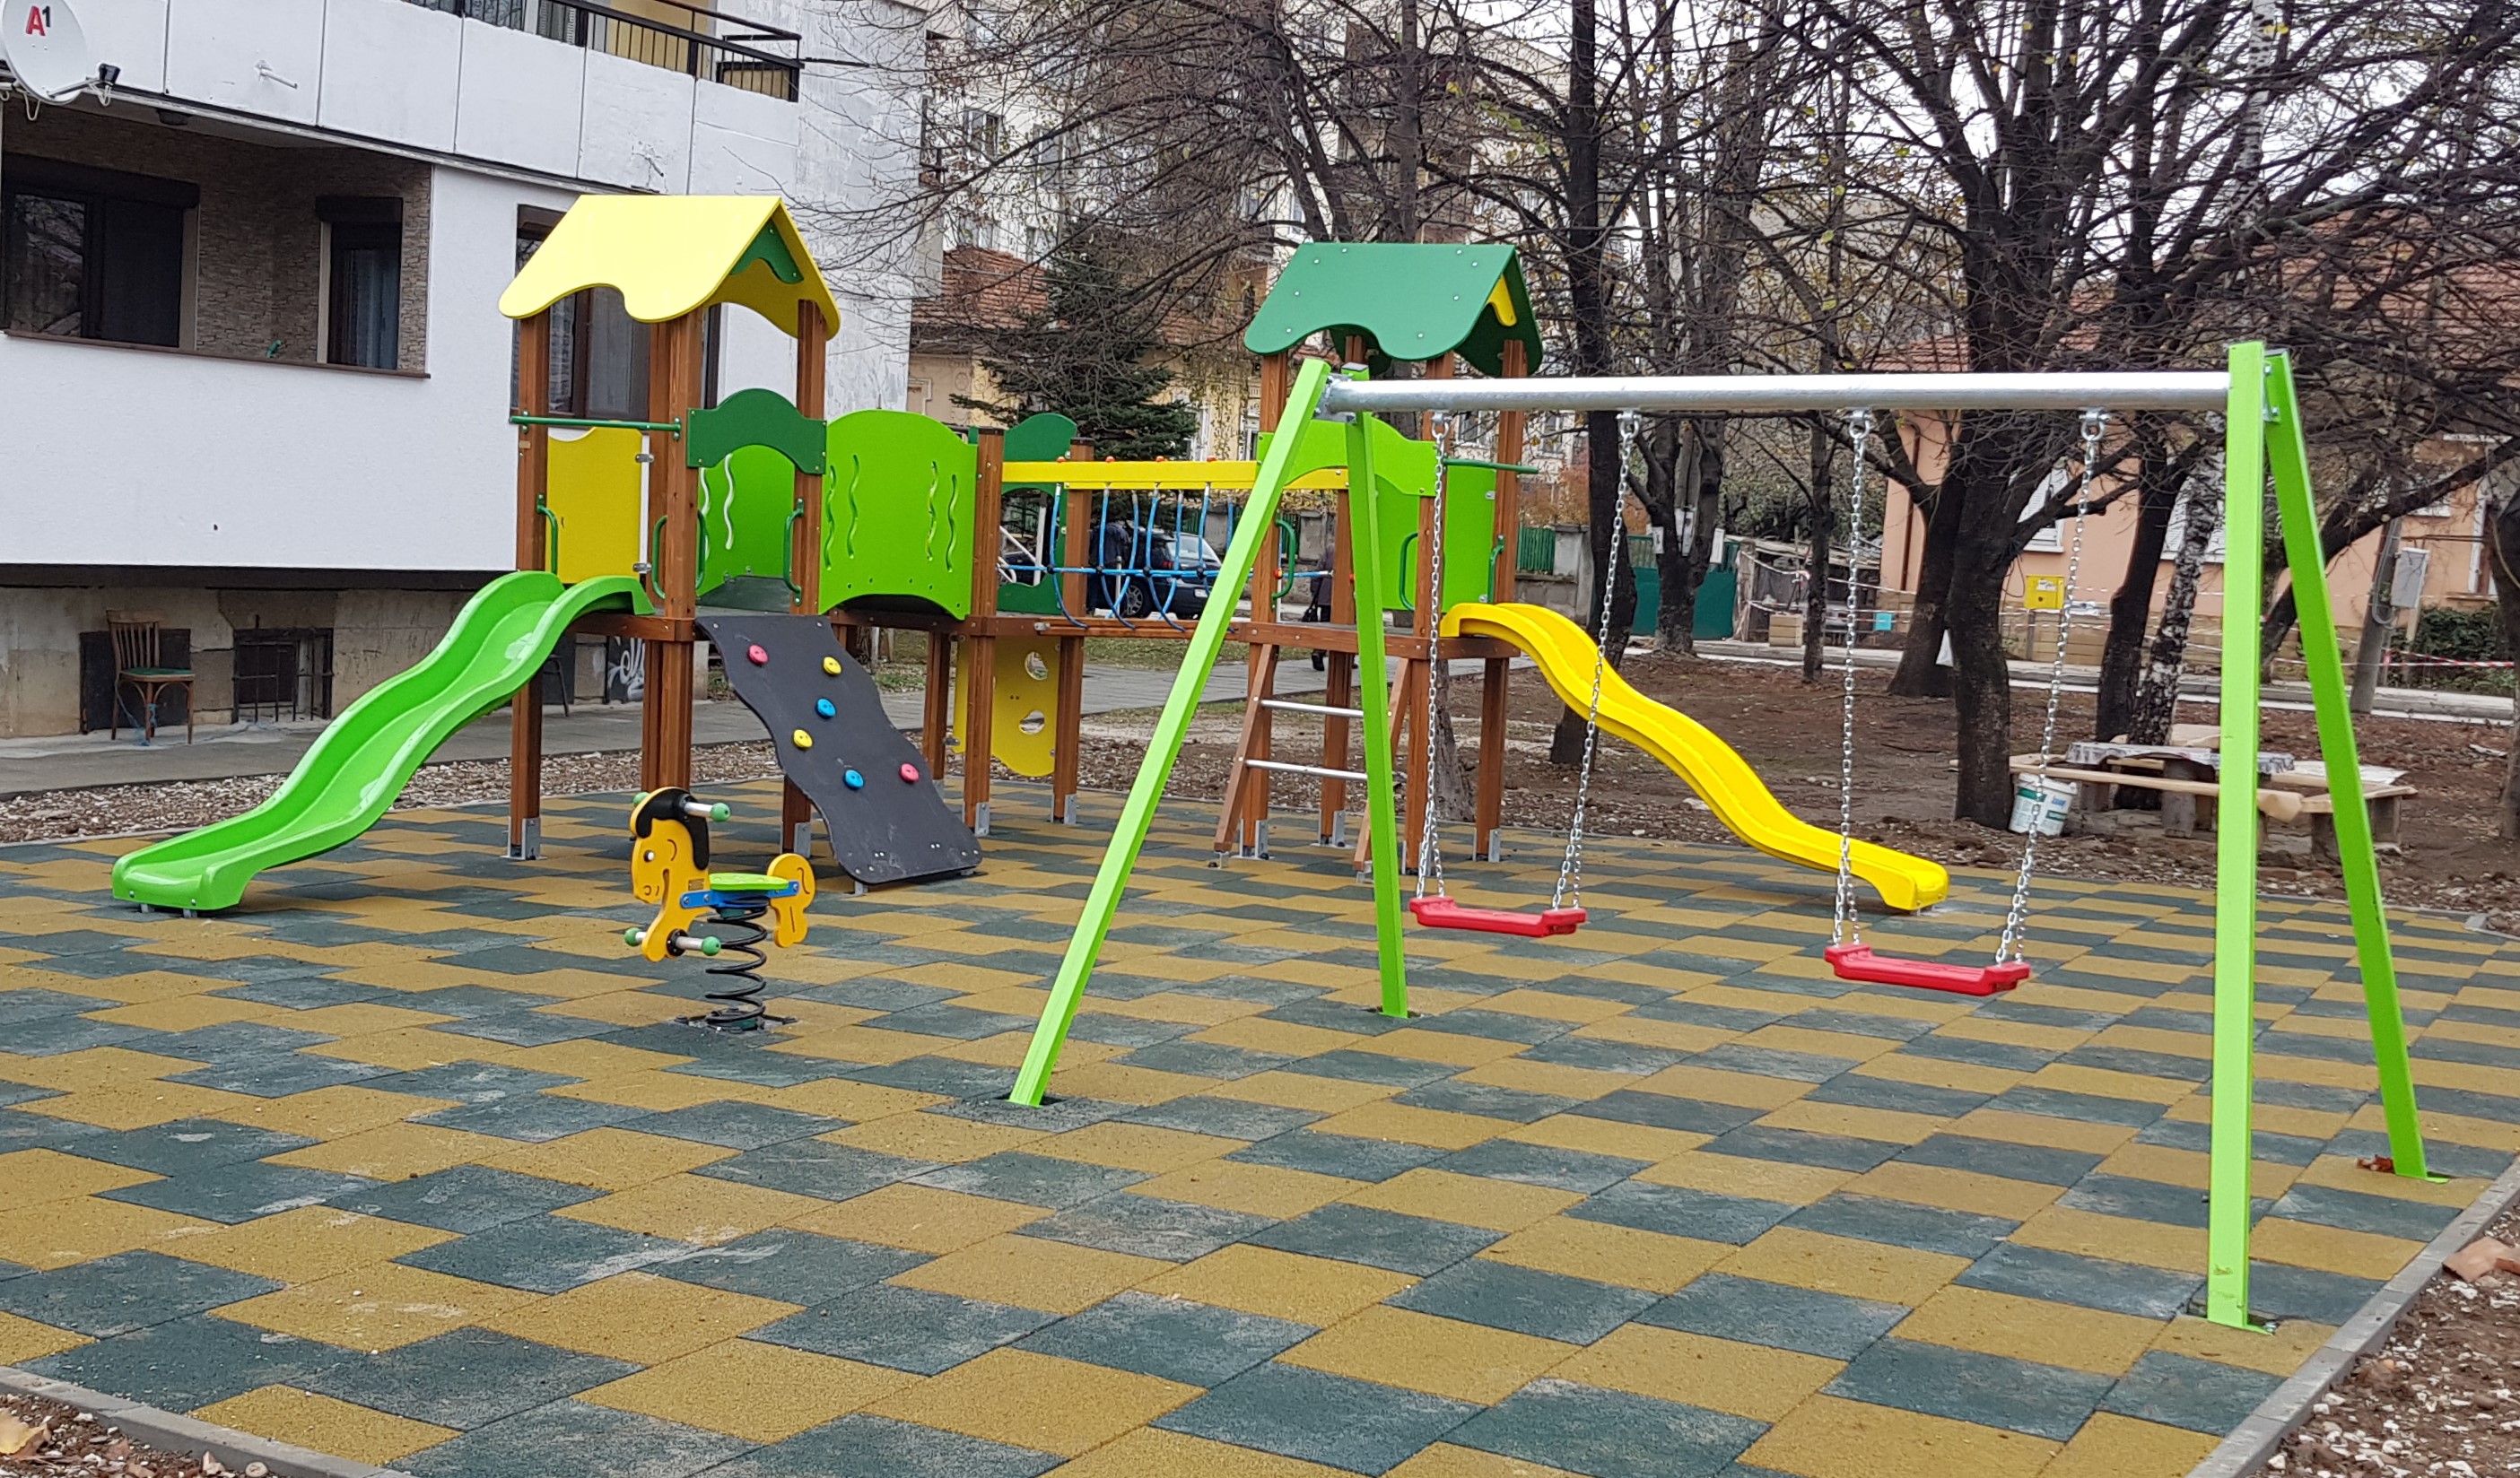 Combined playground equipment, model КД39